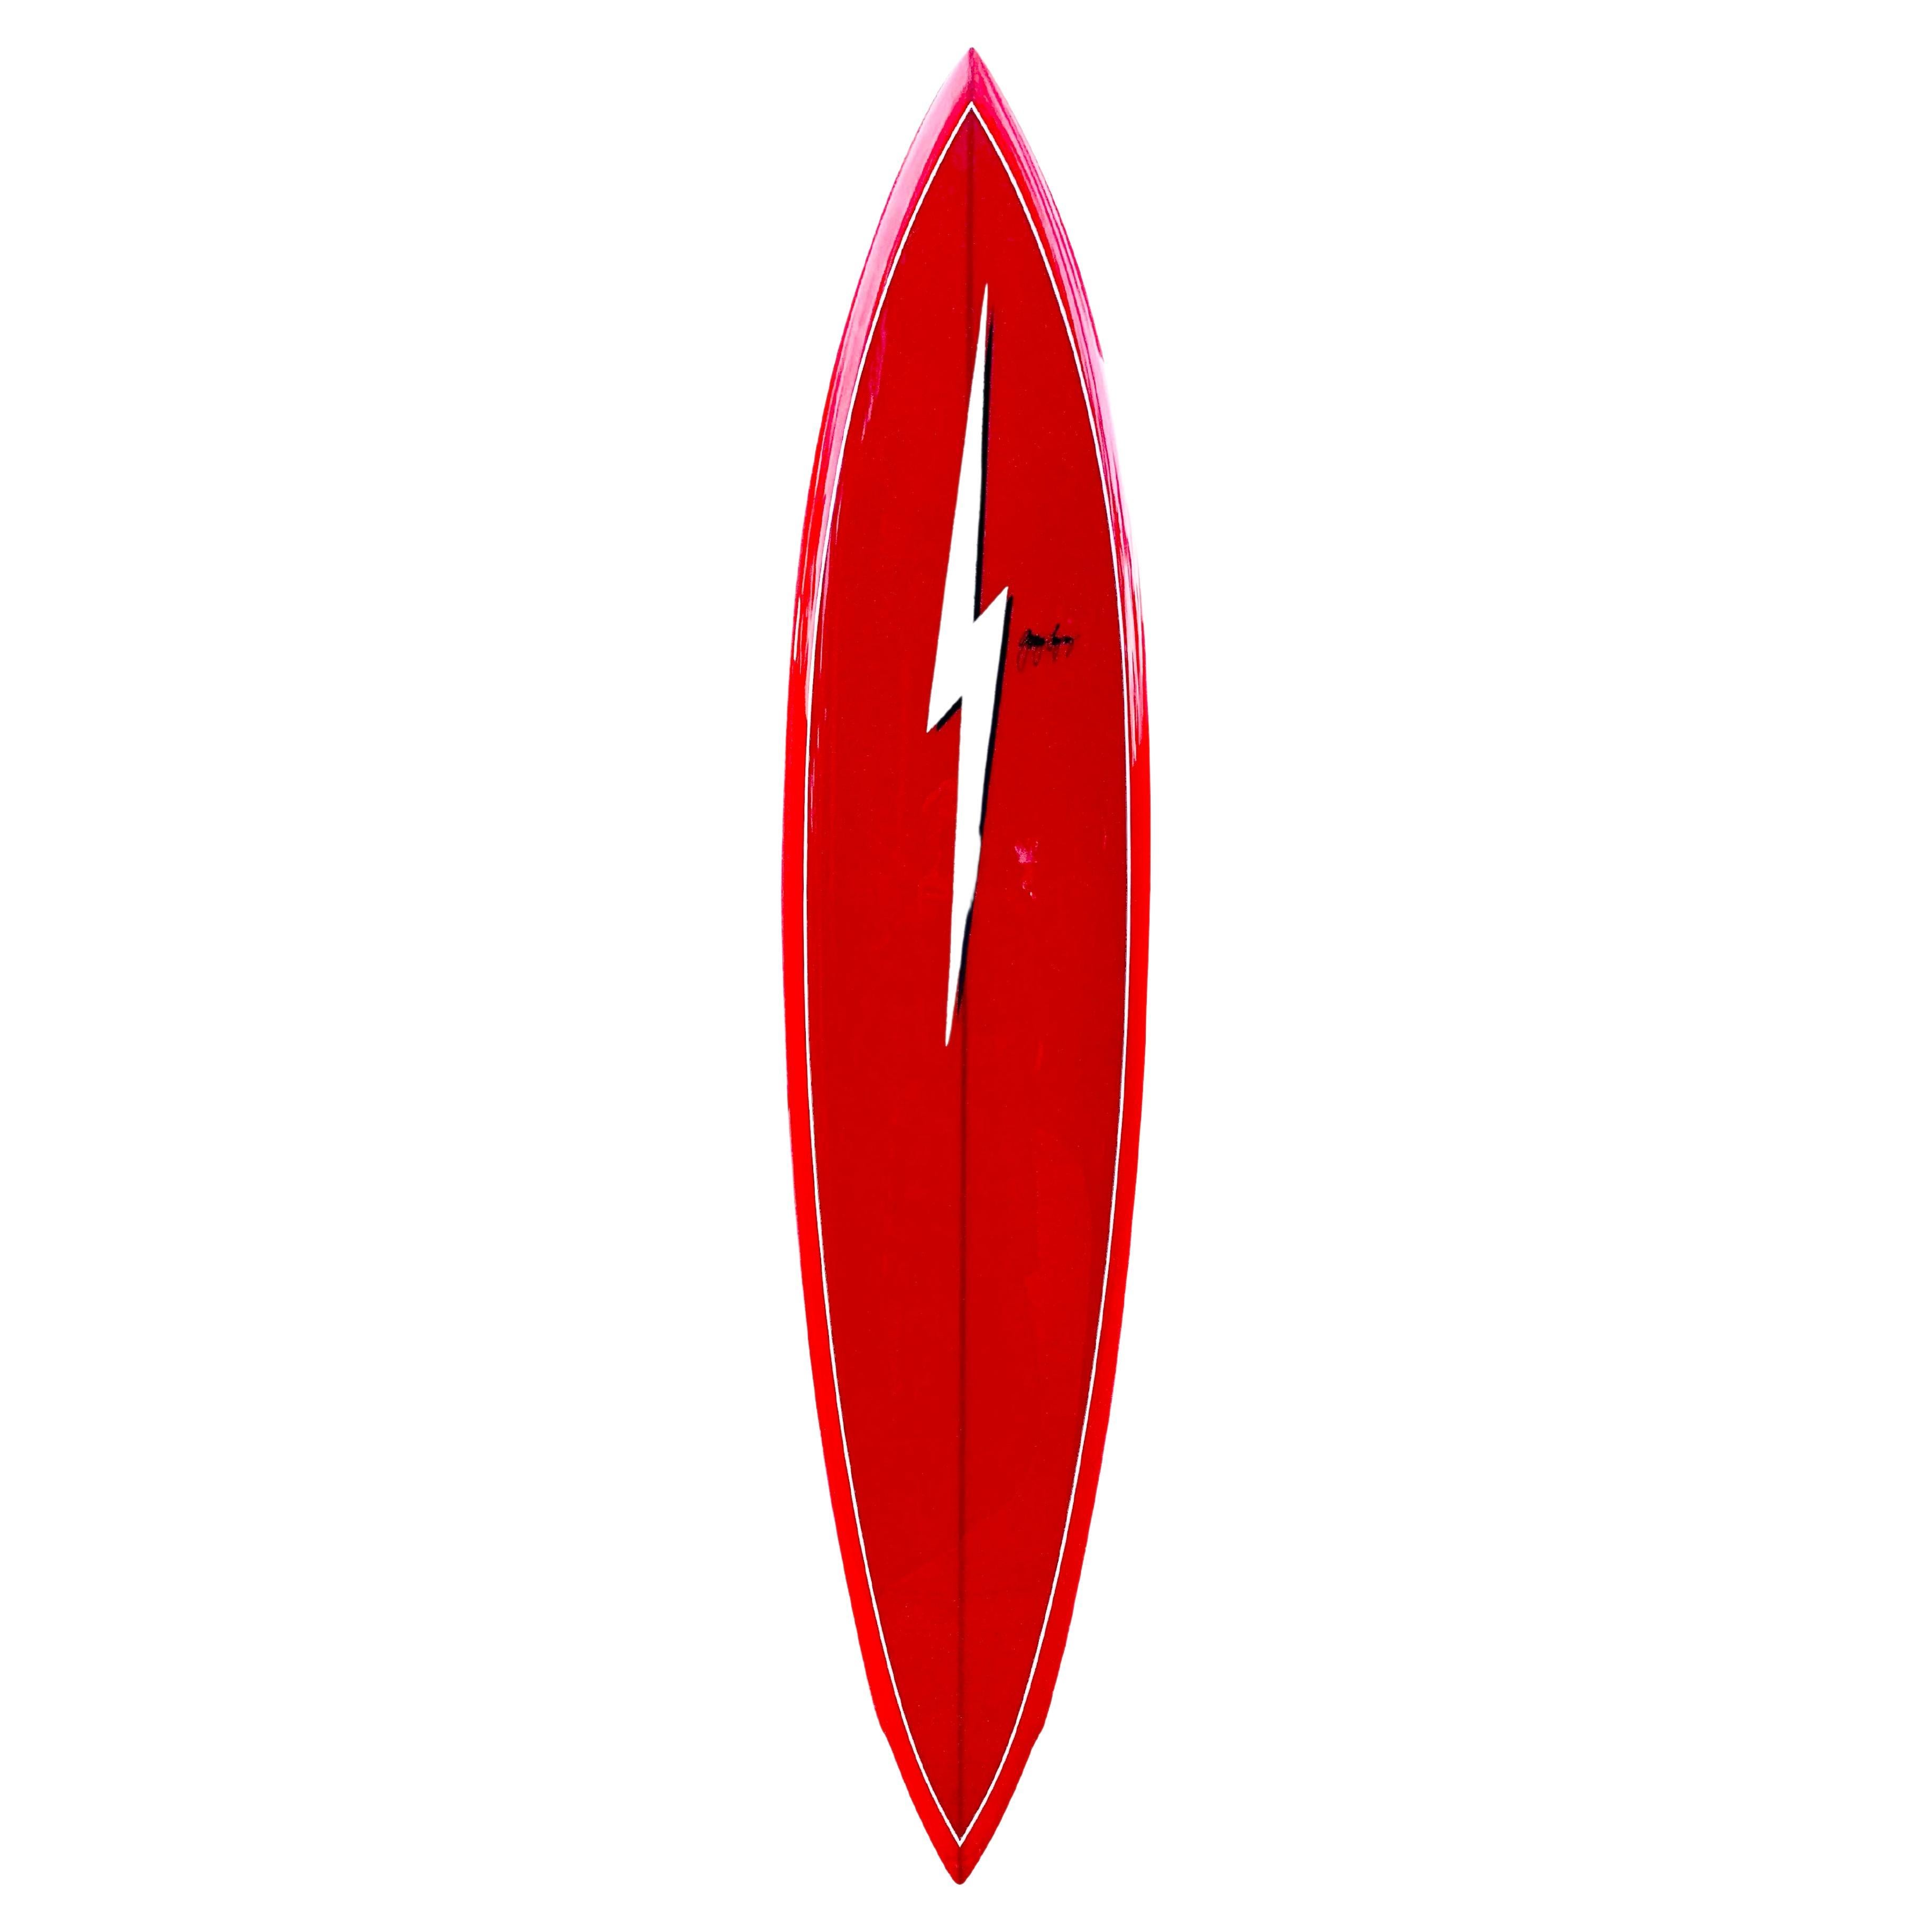 Gerry Lopez - Grand plan de surf Lightning Bolt Big Wednesday